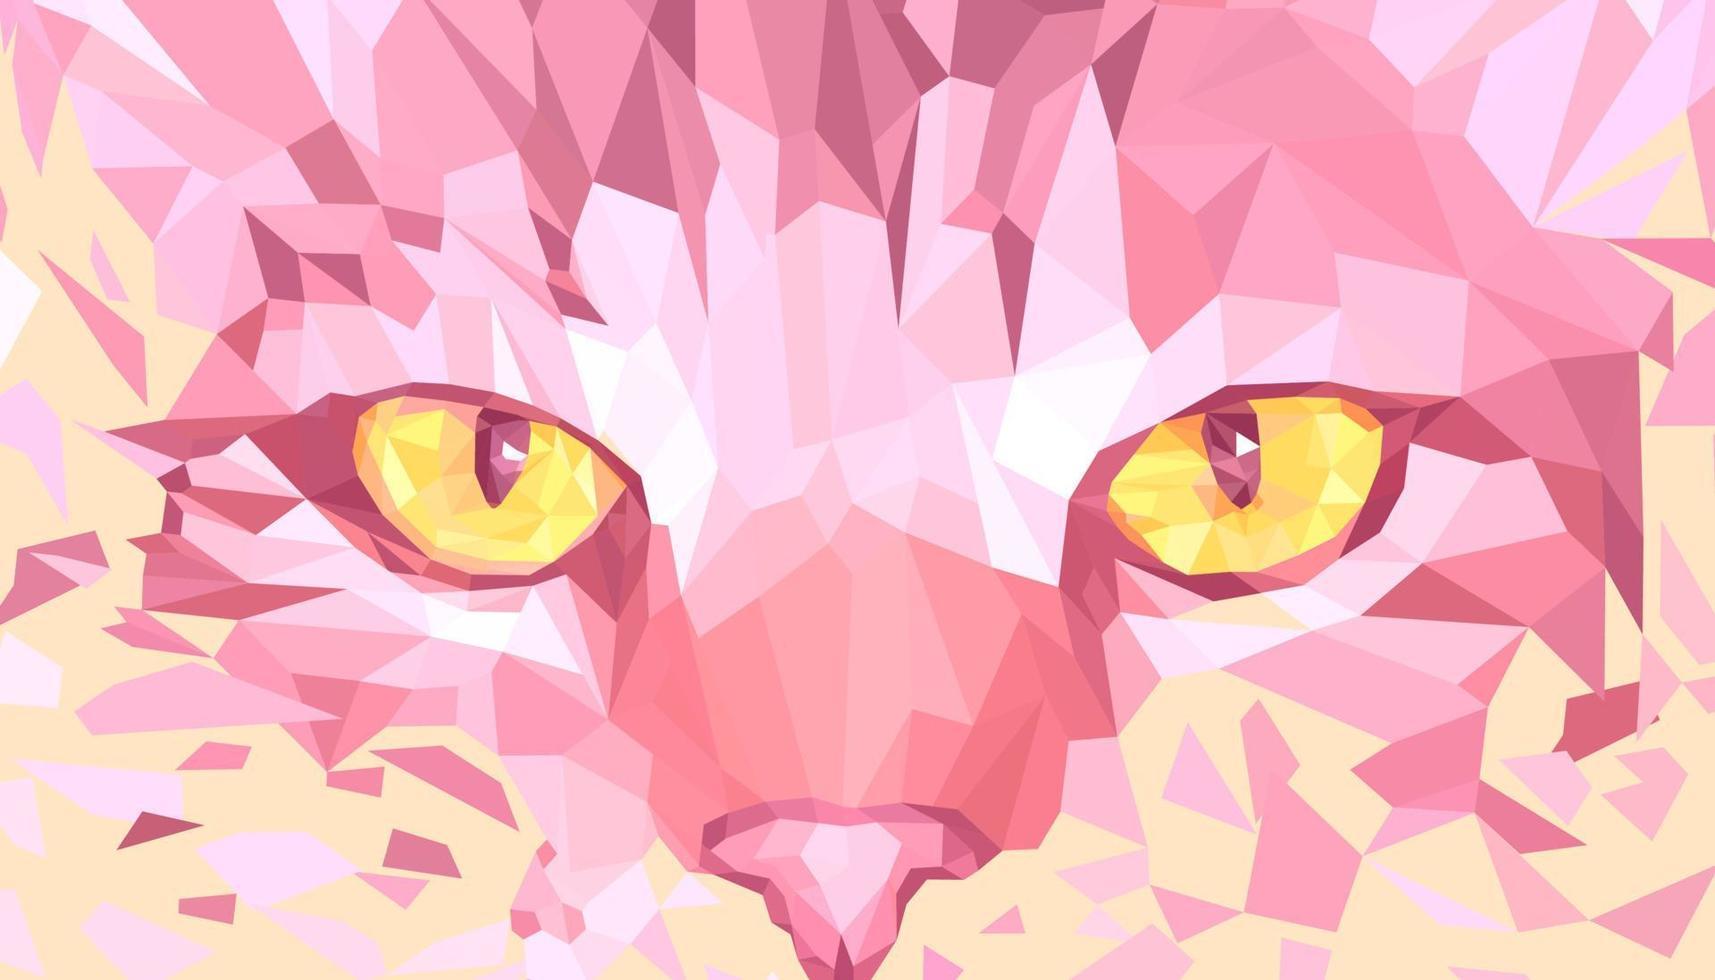 cabeza de un gato pelirrojo con ojos amarillos. vector